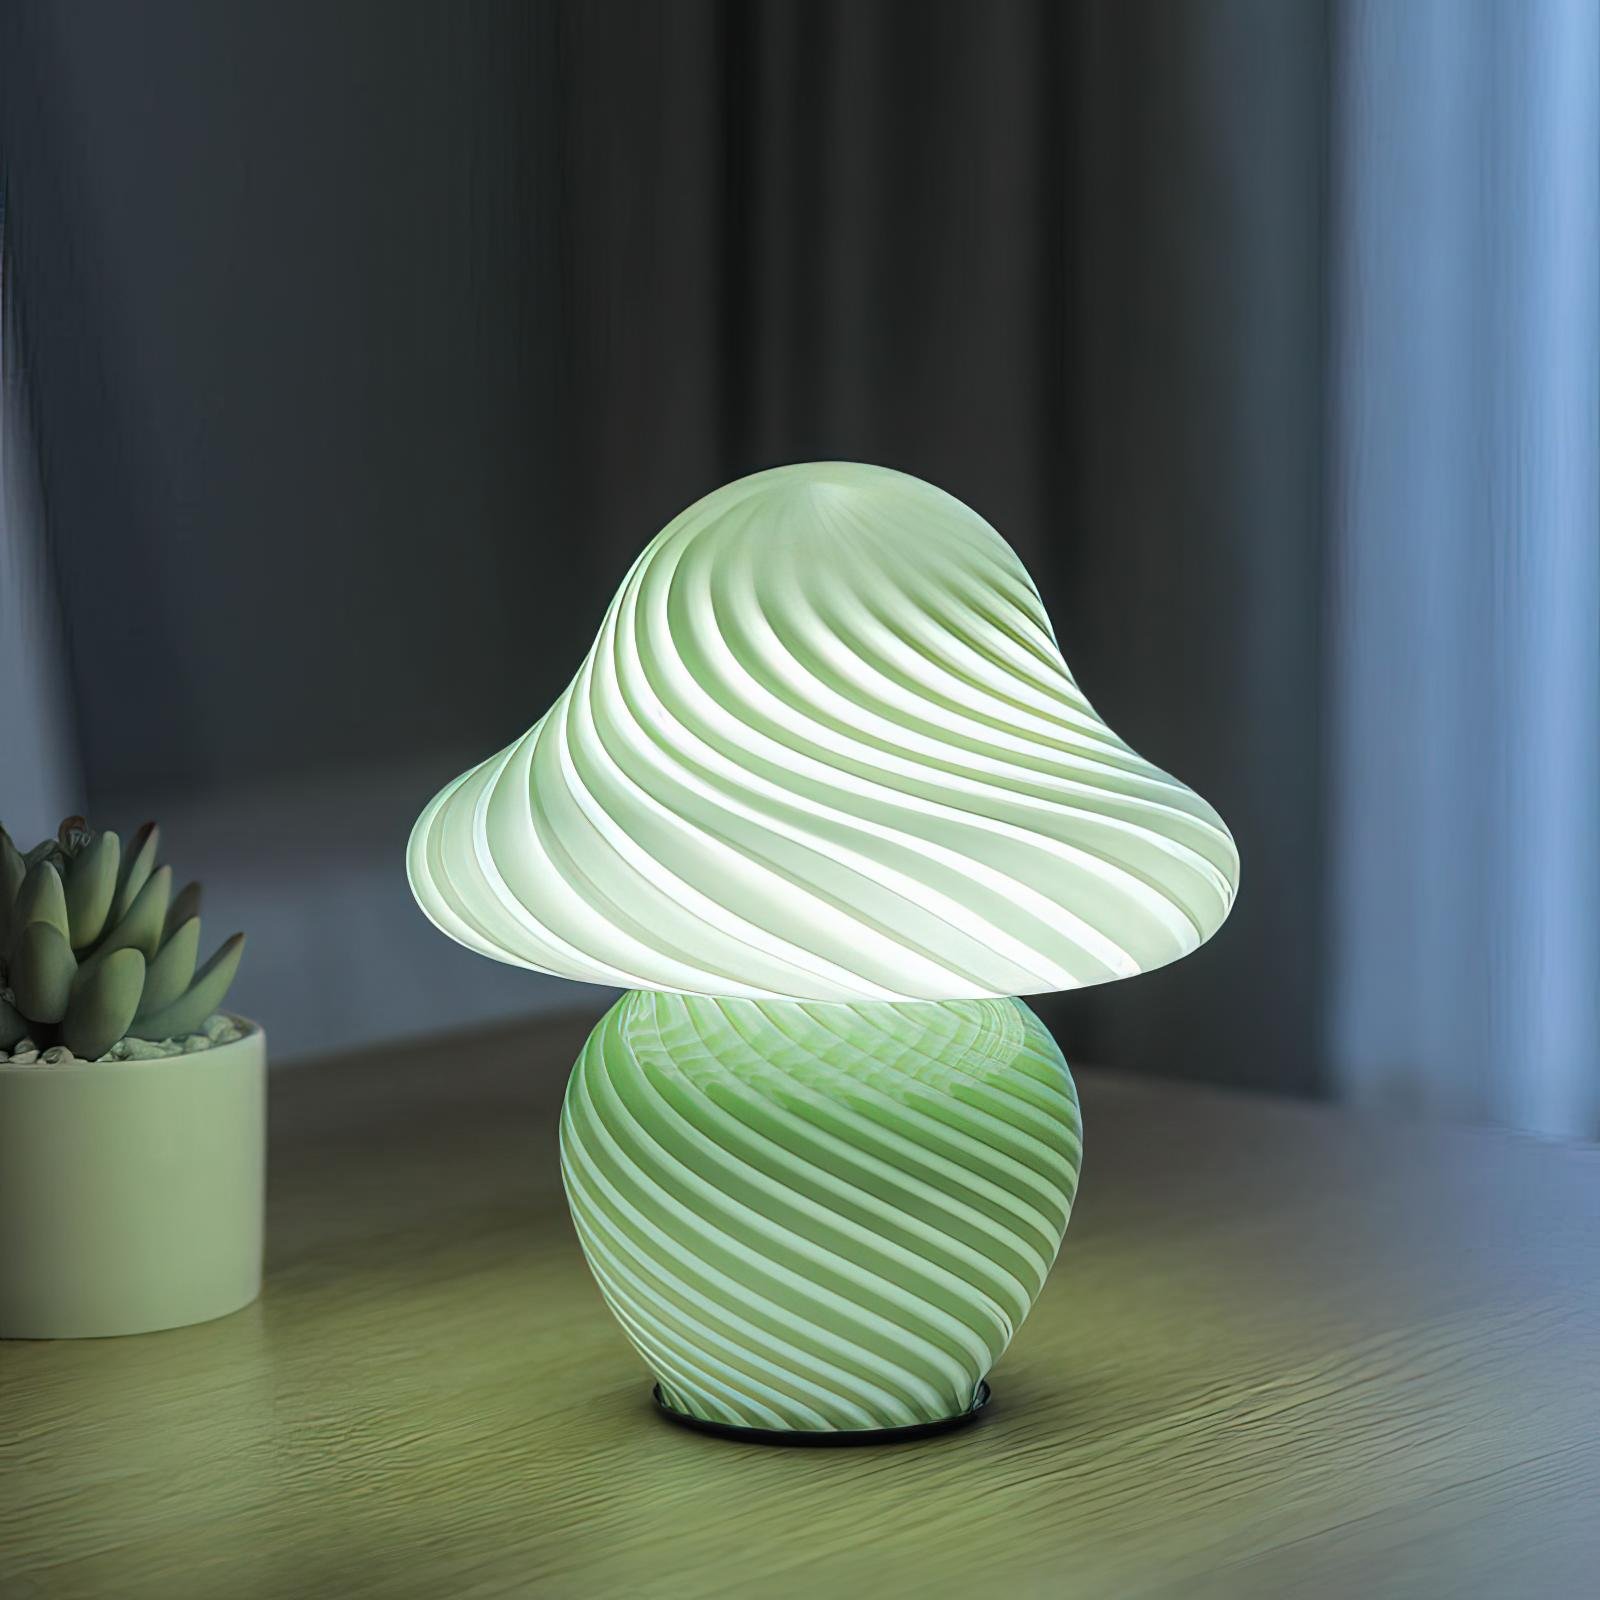 New mushroom lamp stripe glass creative personality model office decorative Amer 3